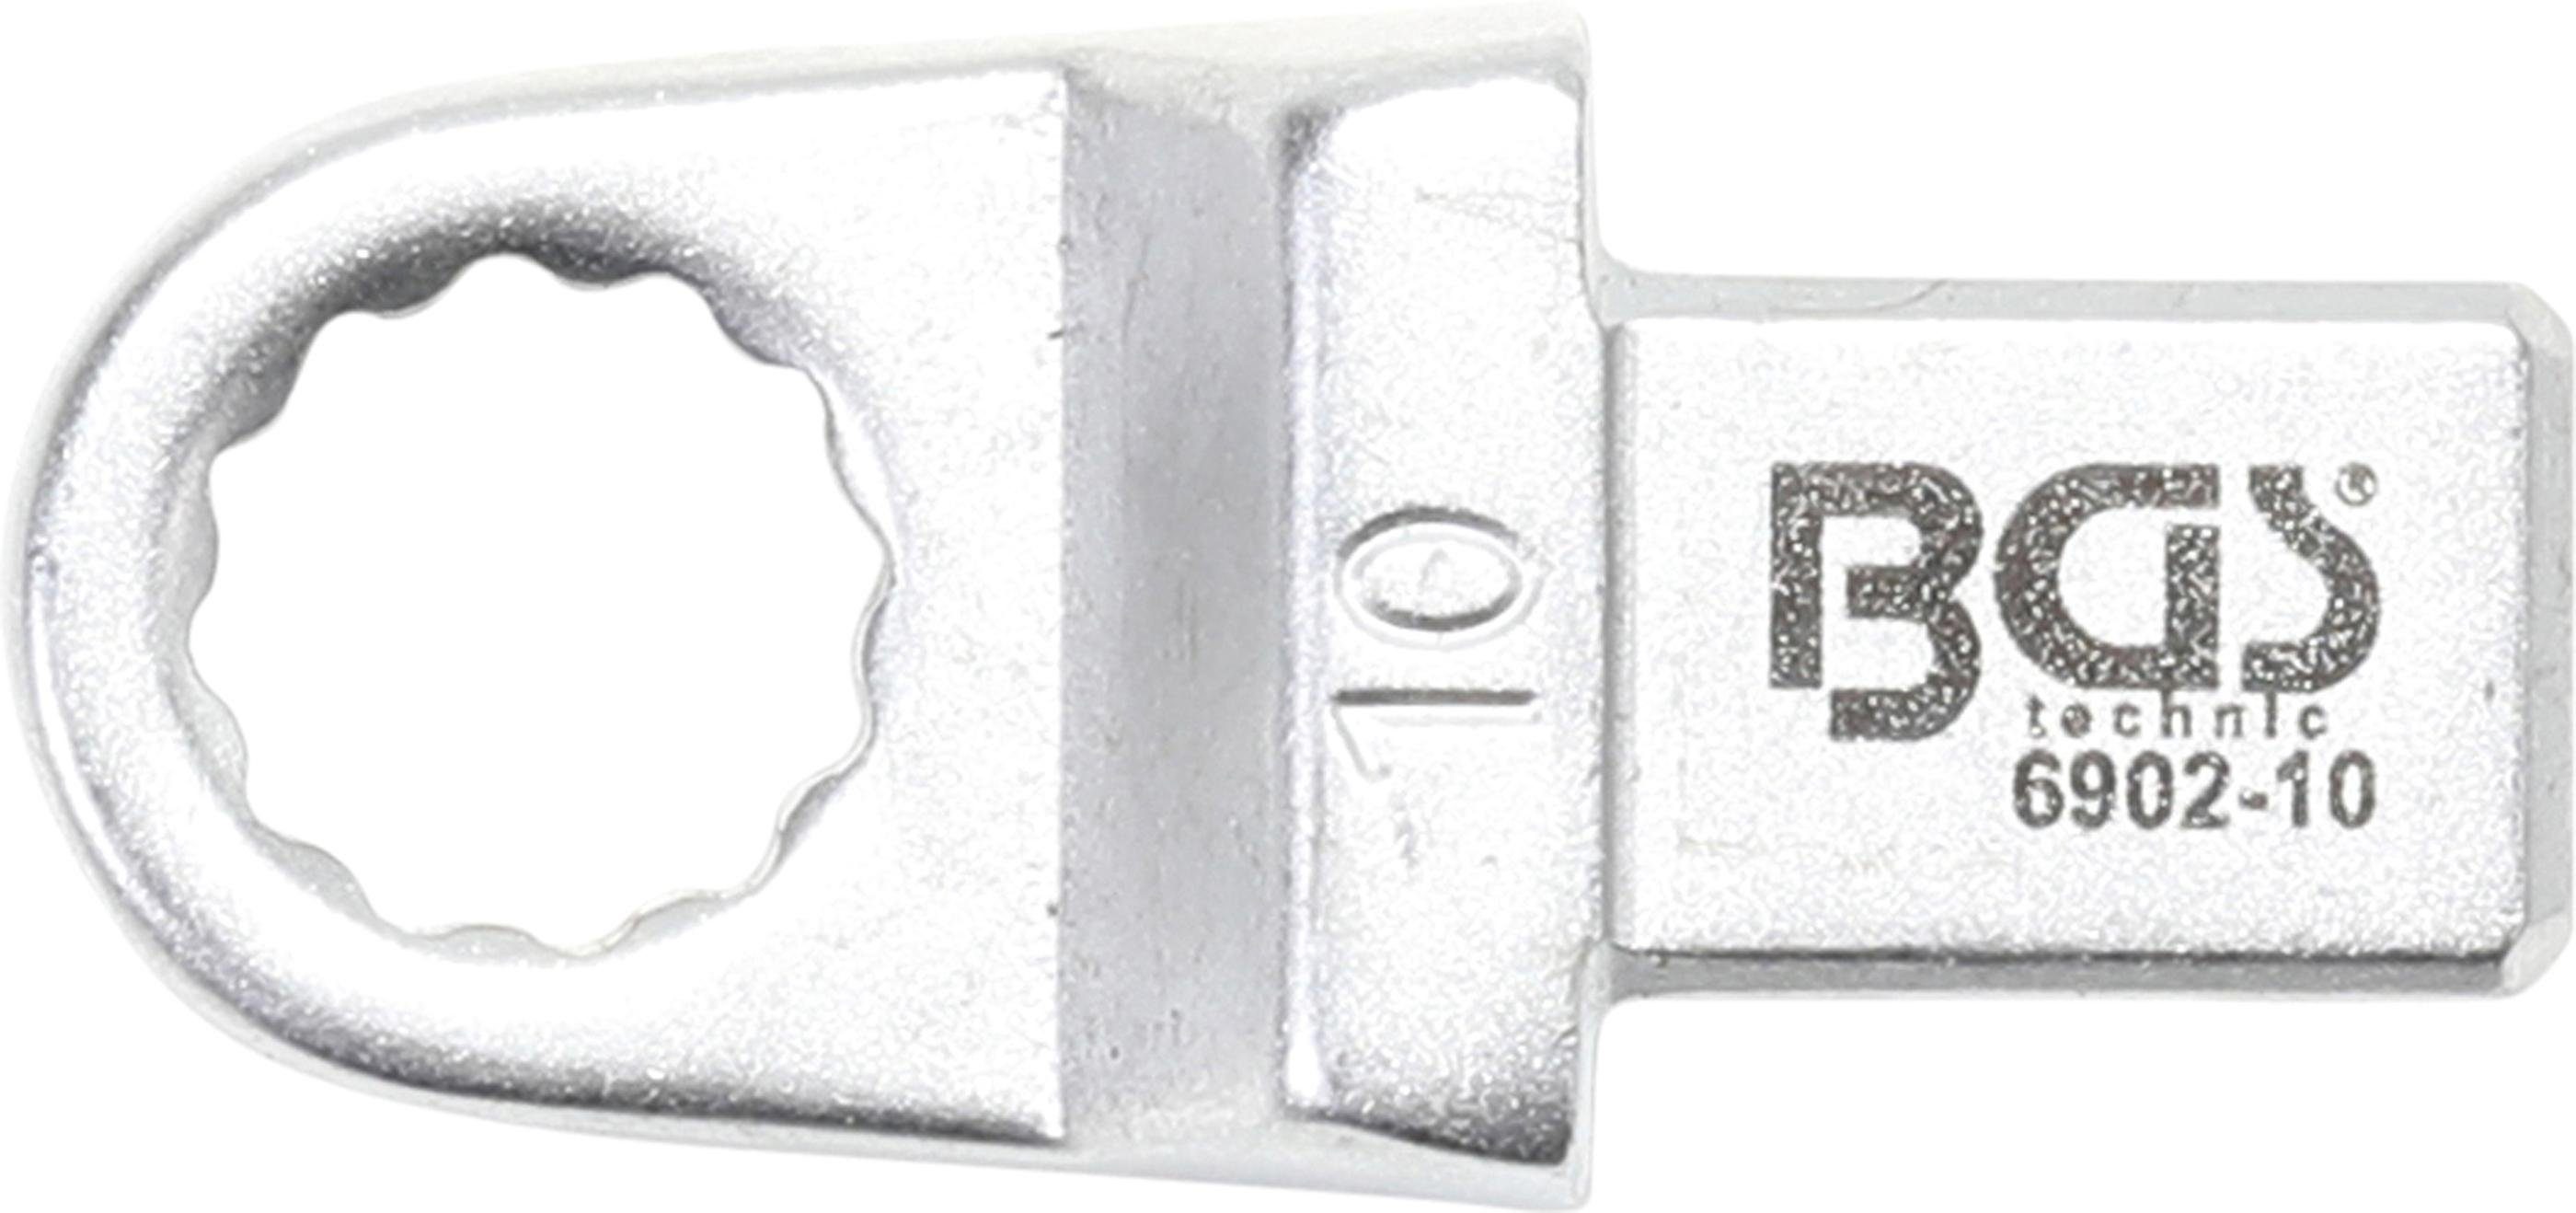 BGS technic Ausstechform x mm, mm Einsteck-Ringschlüssel, 12 10 9 Aufnahme